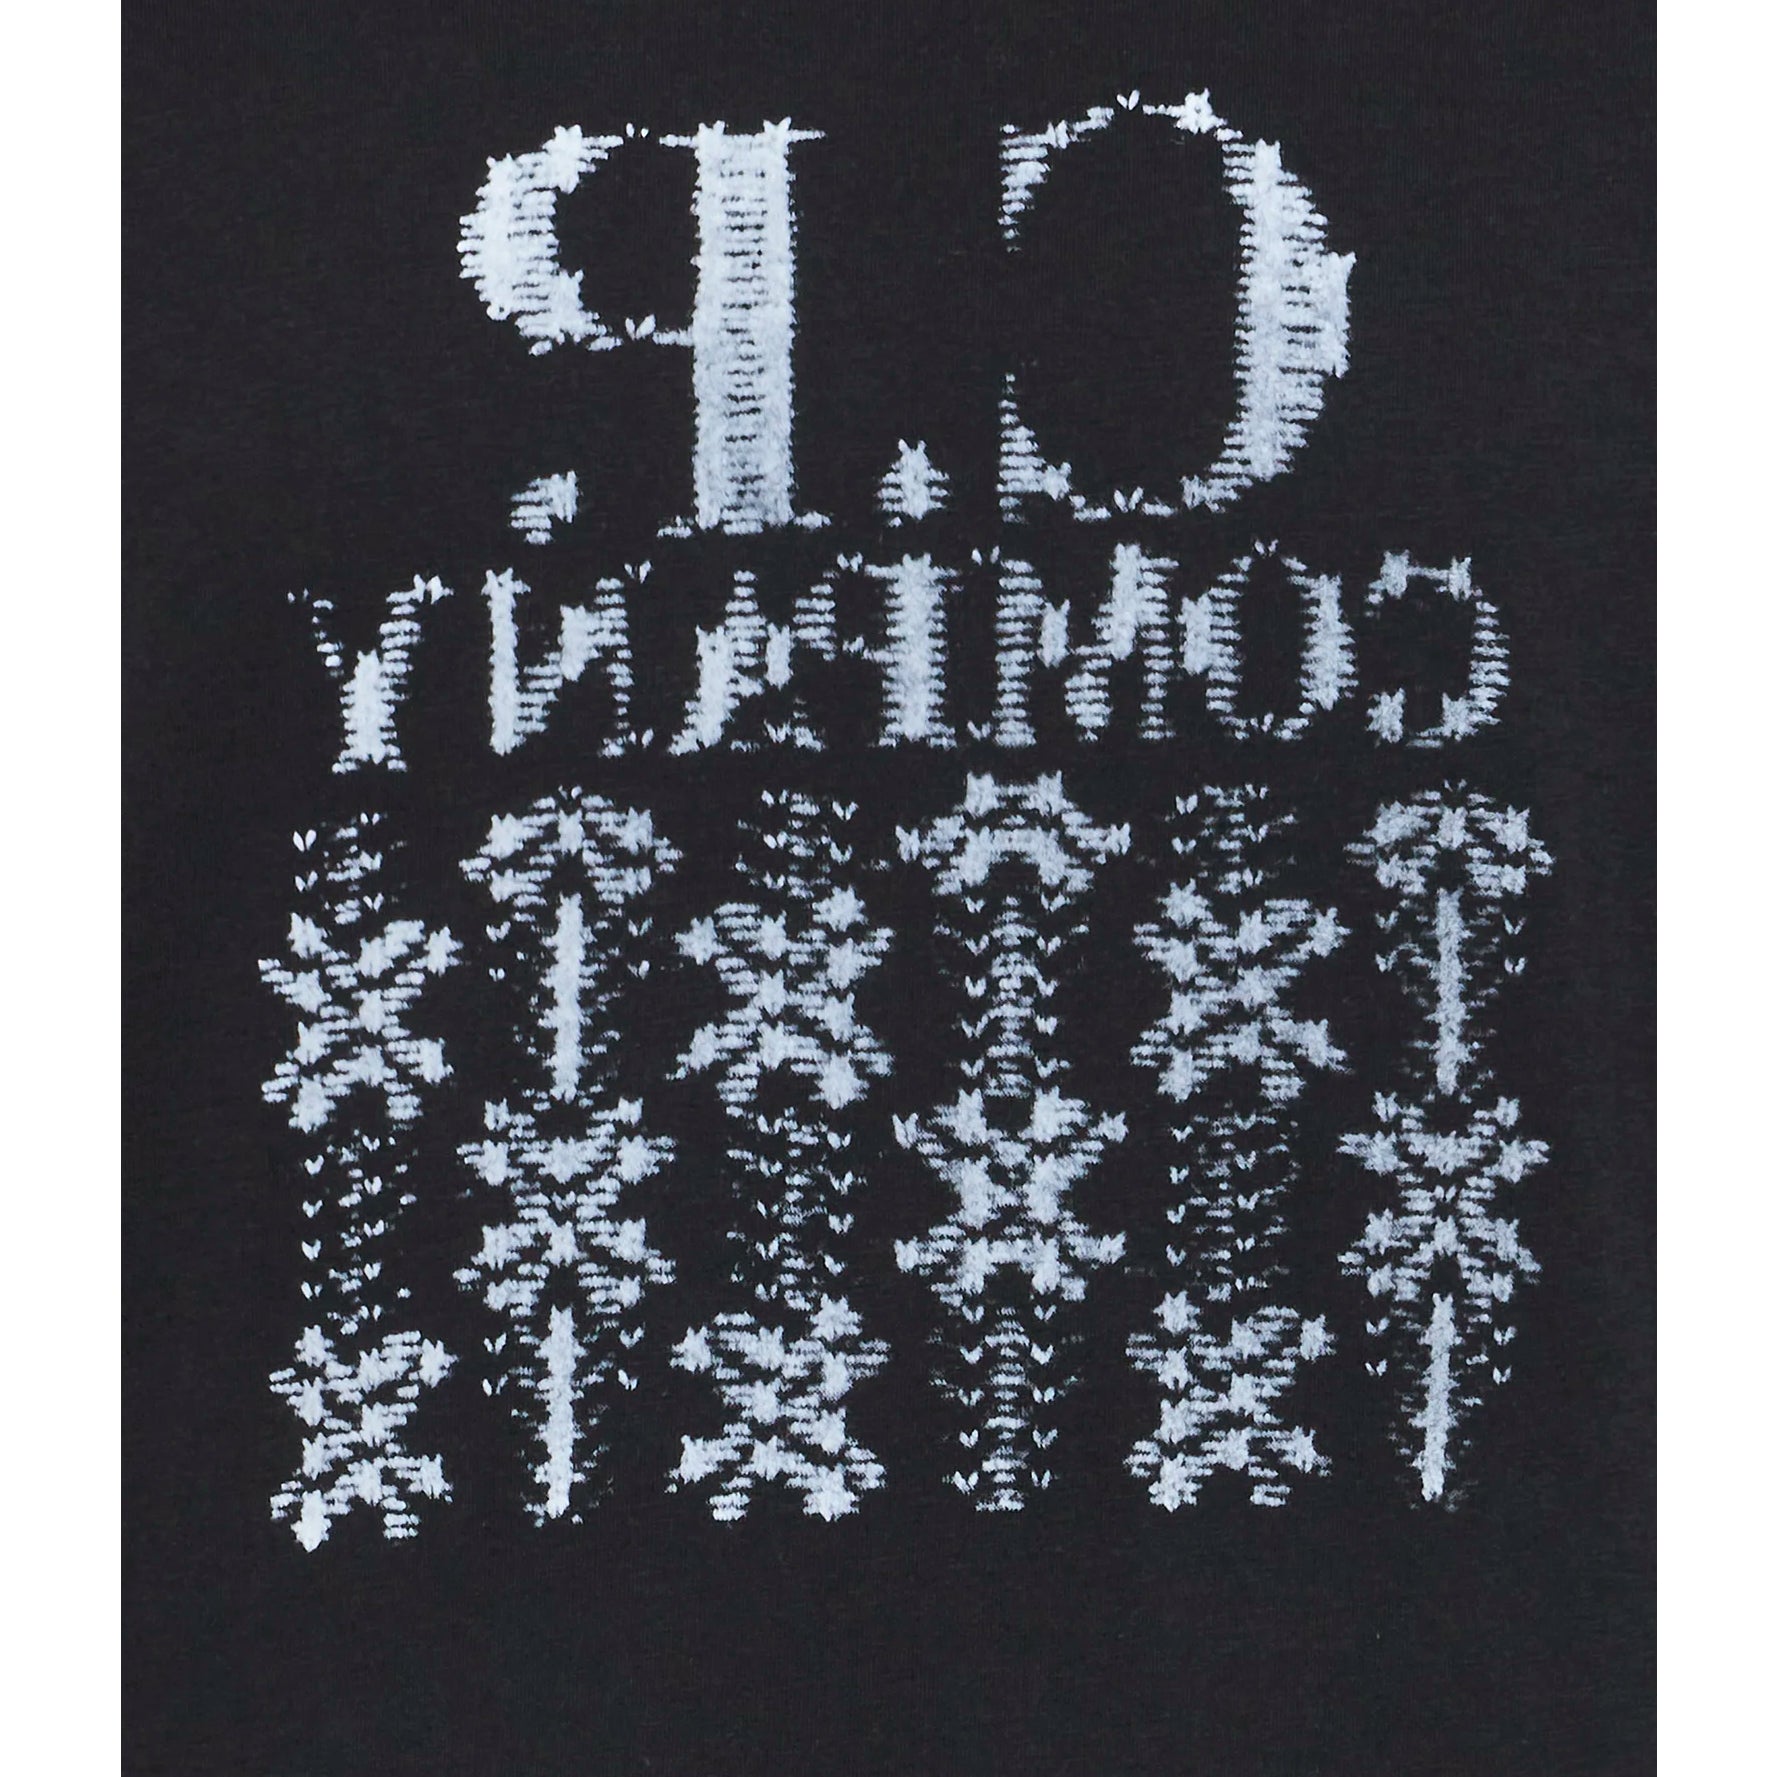 C.P. Company 24/1 Jersey Logo T-shirt - 999 Black - Escape Menswear